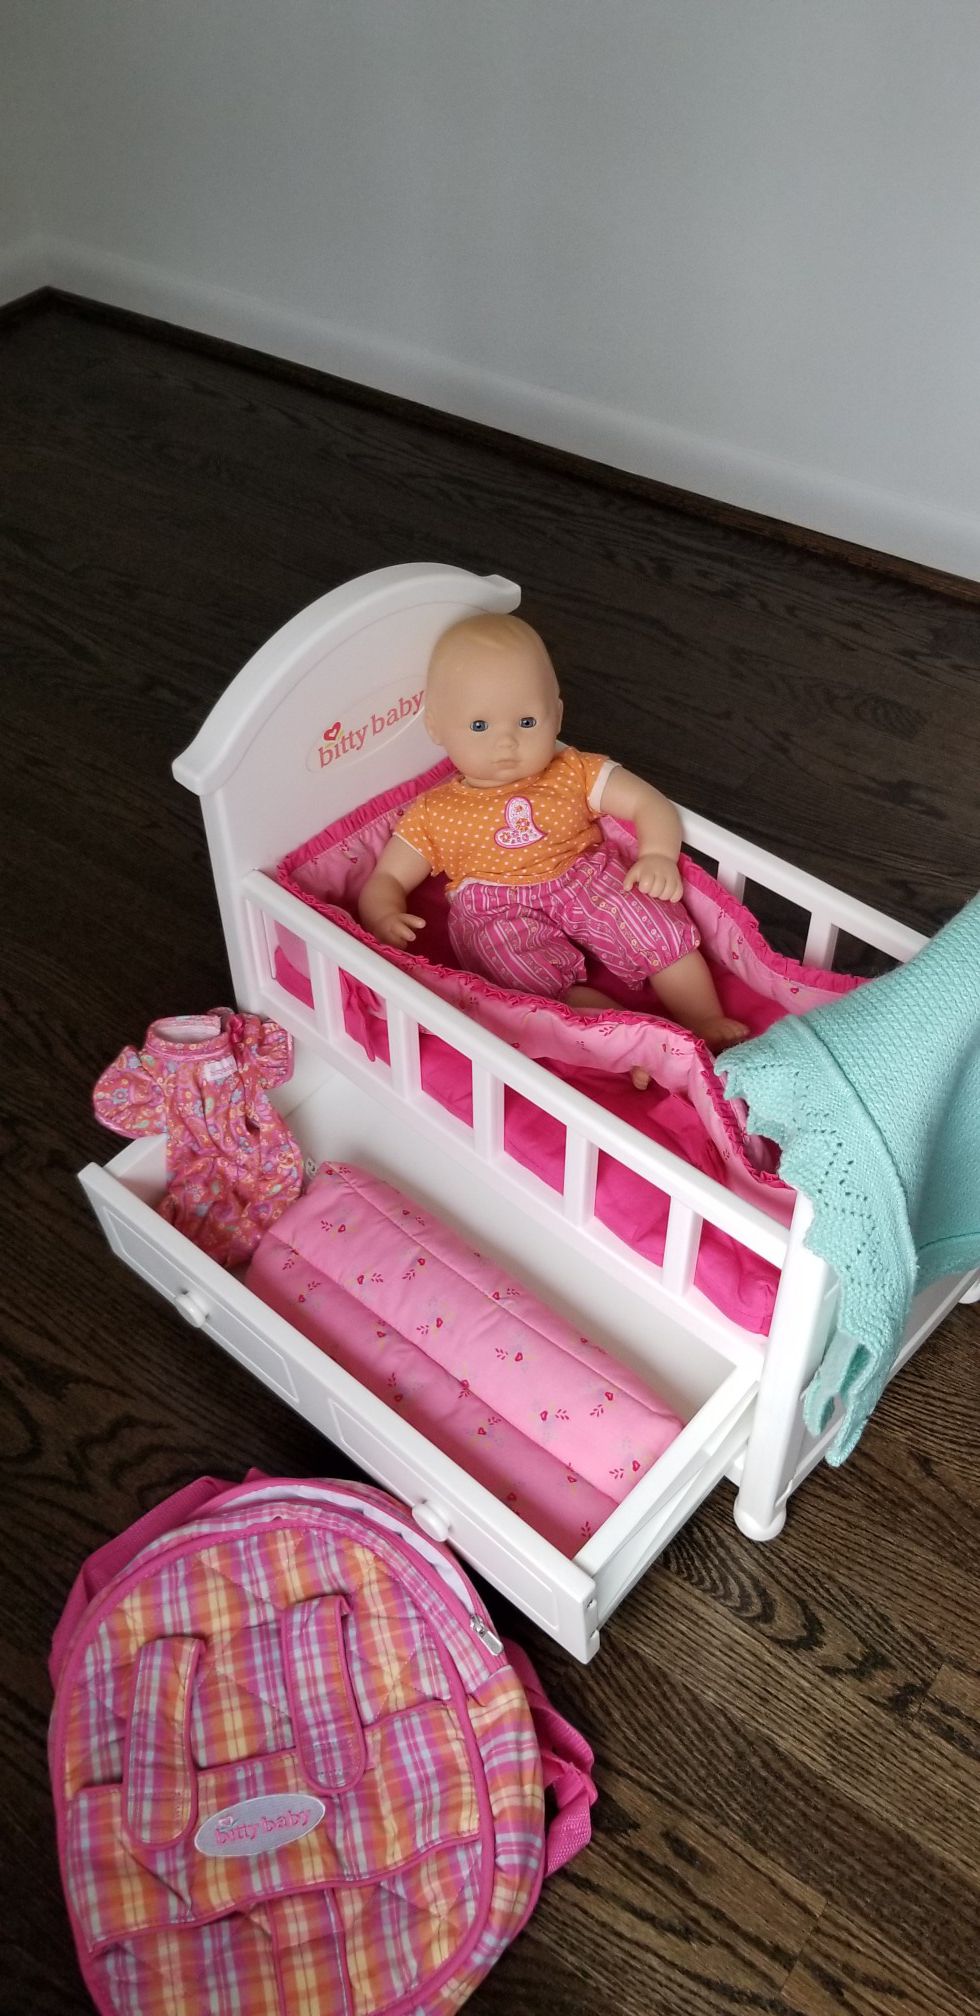 Bitty baby including Crib & Bedding